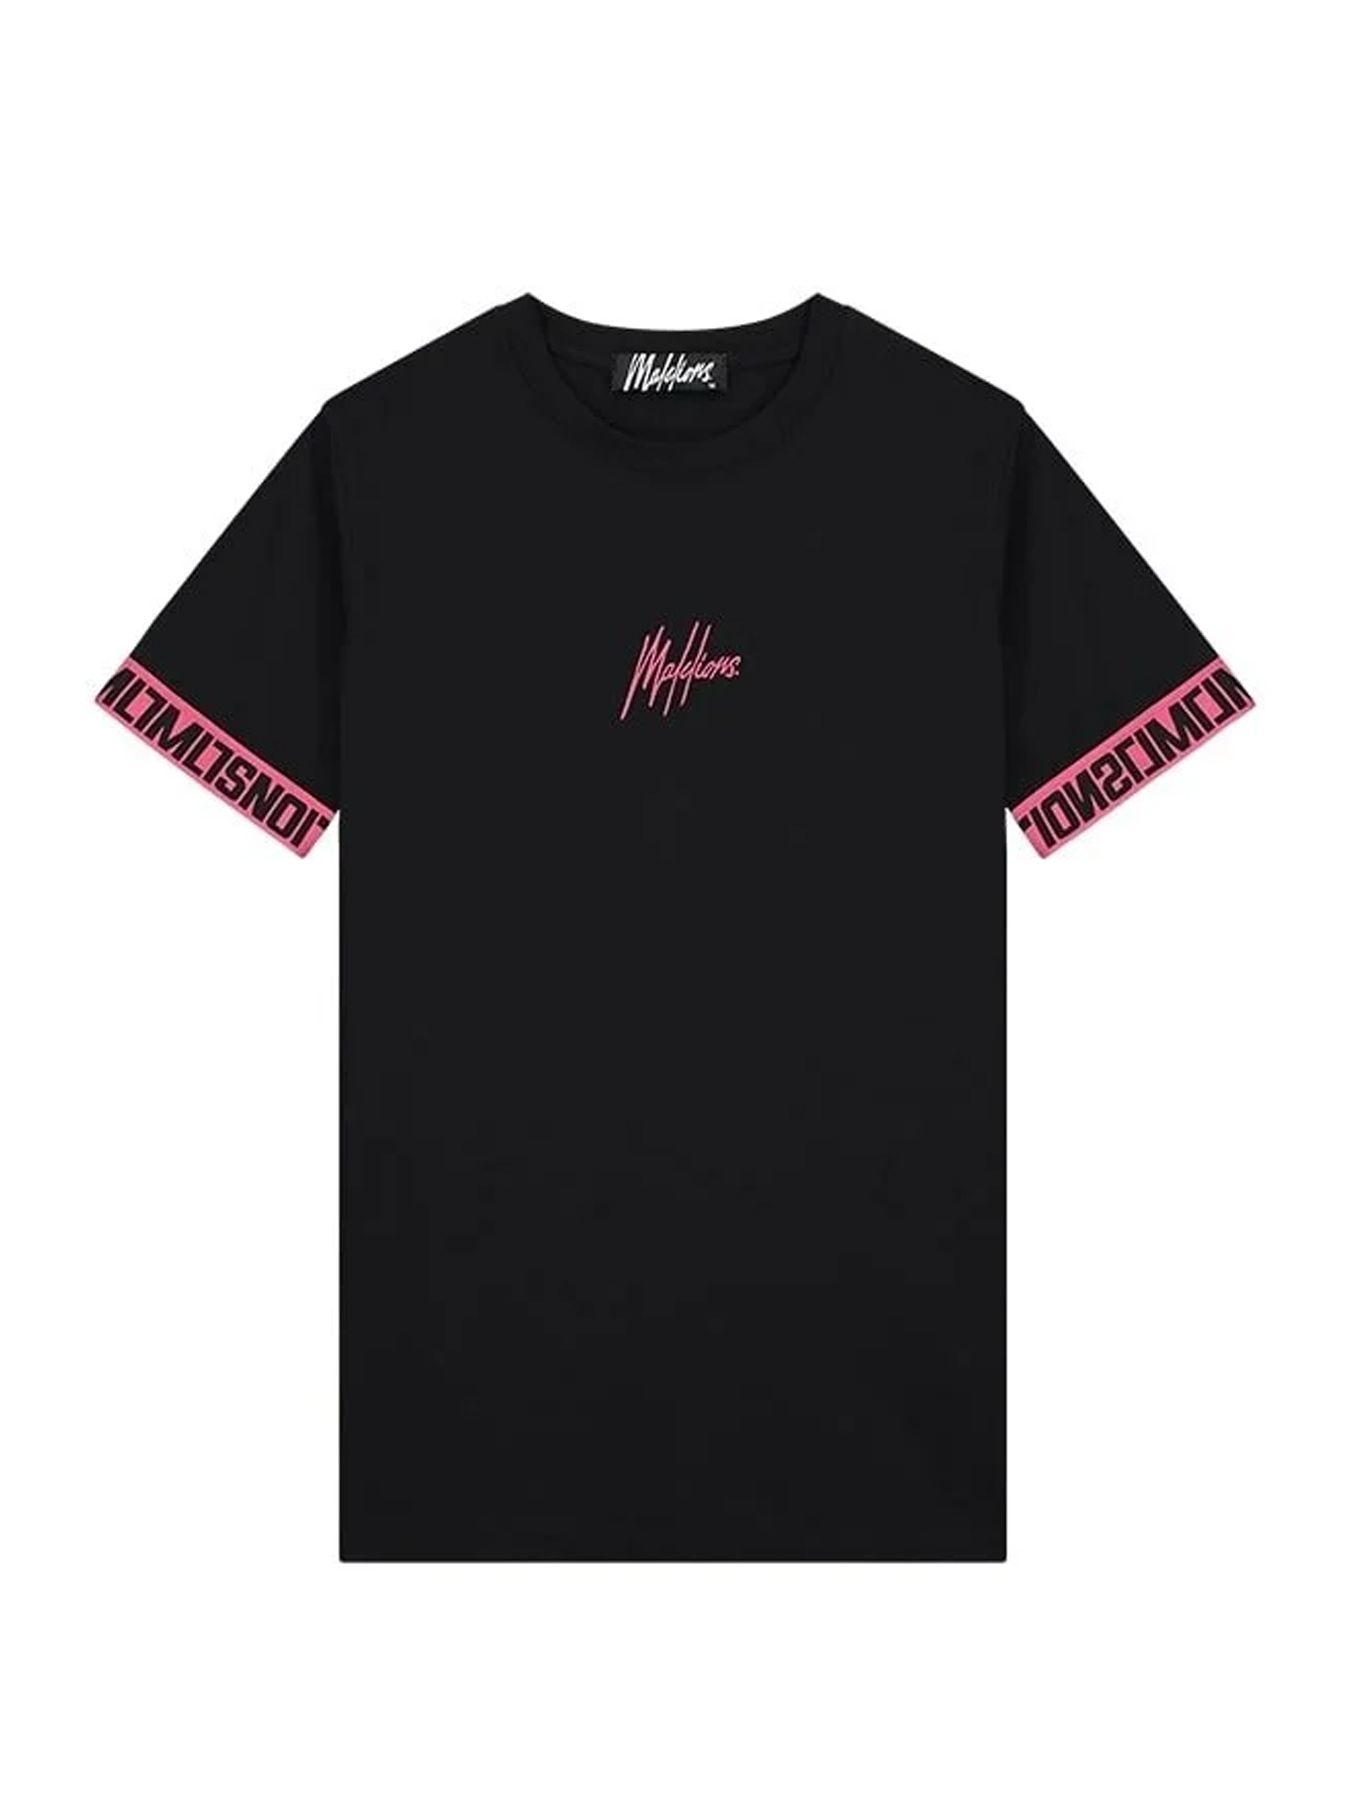 Malelions Men Venetian t-shirt Black/Hot pink 00109021-154